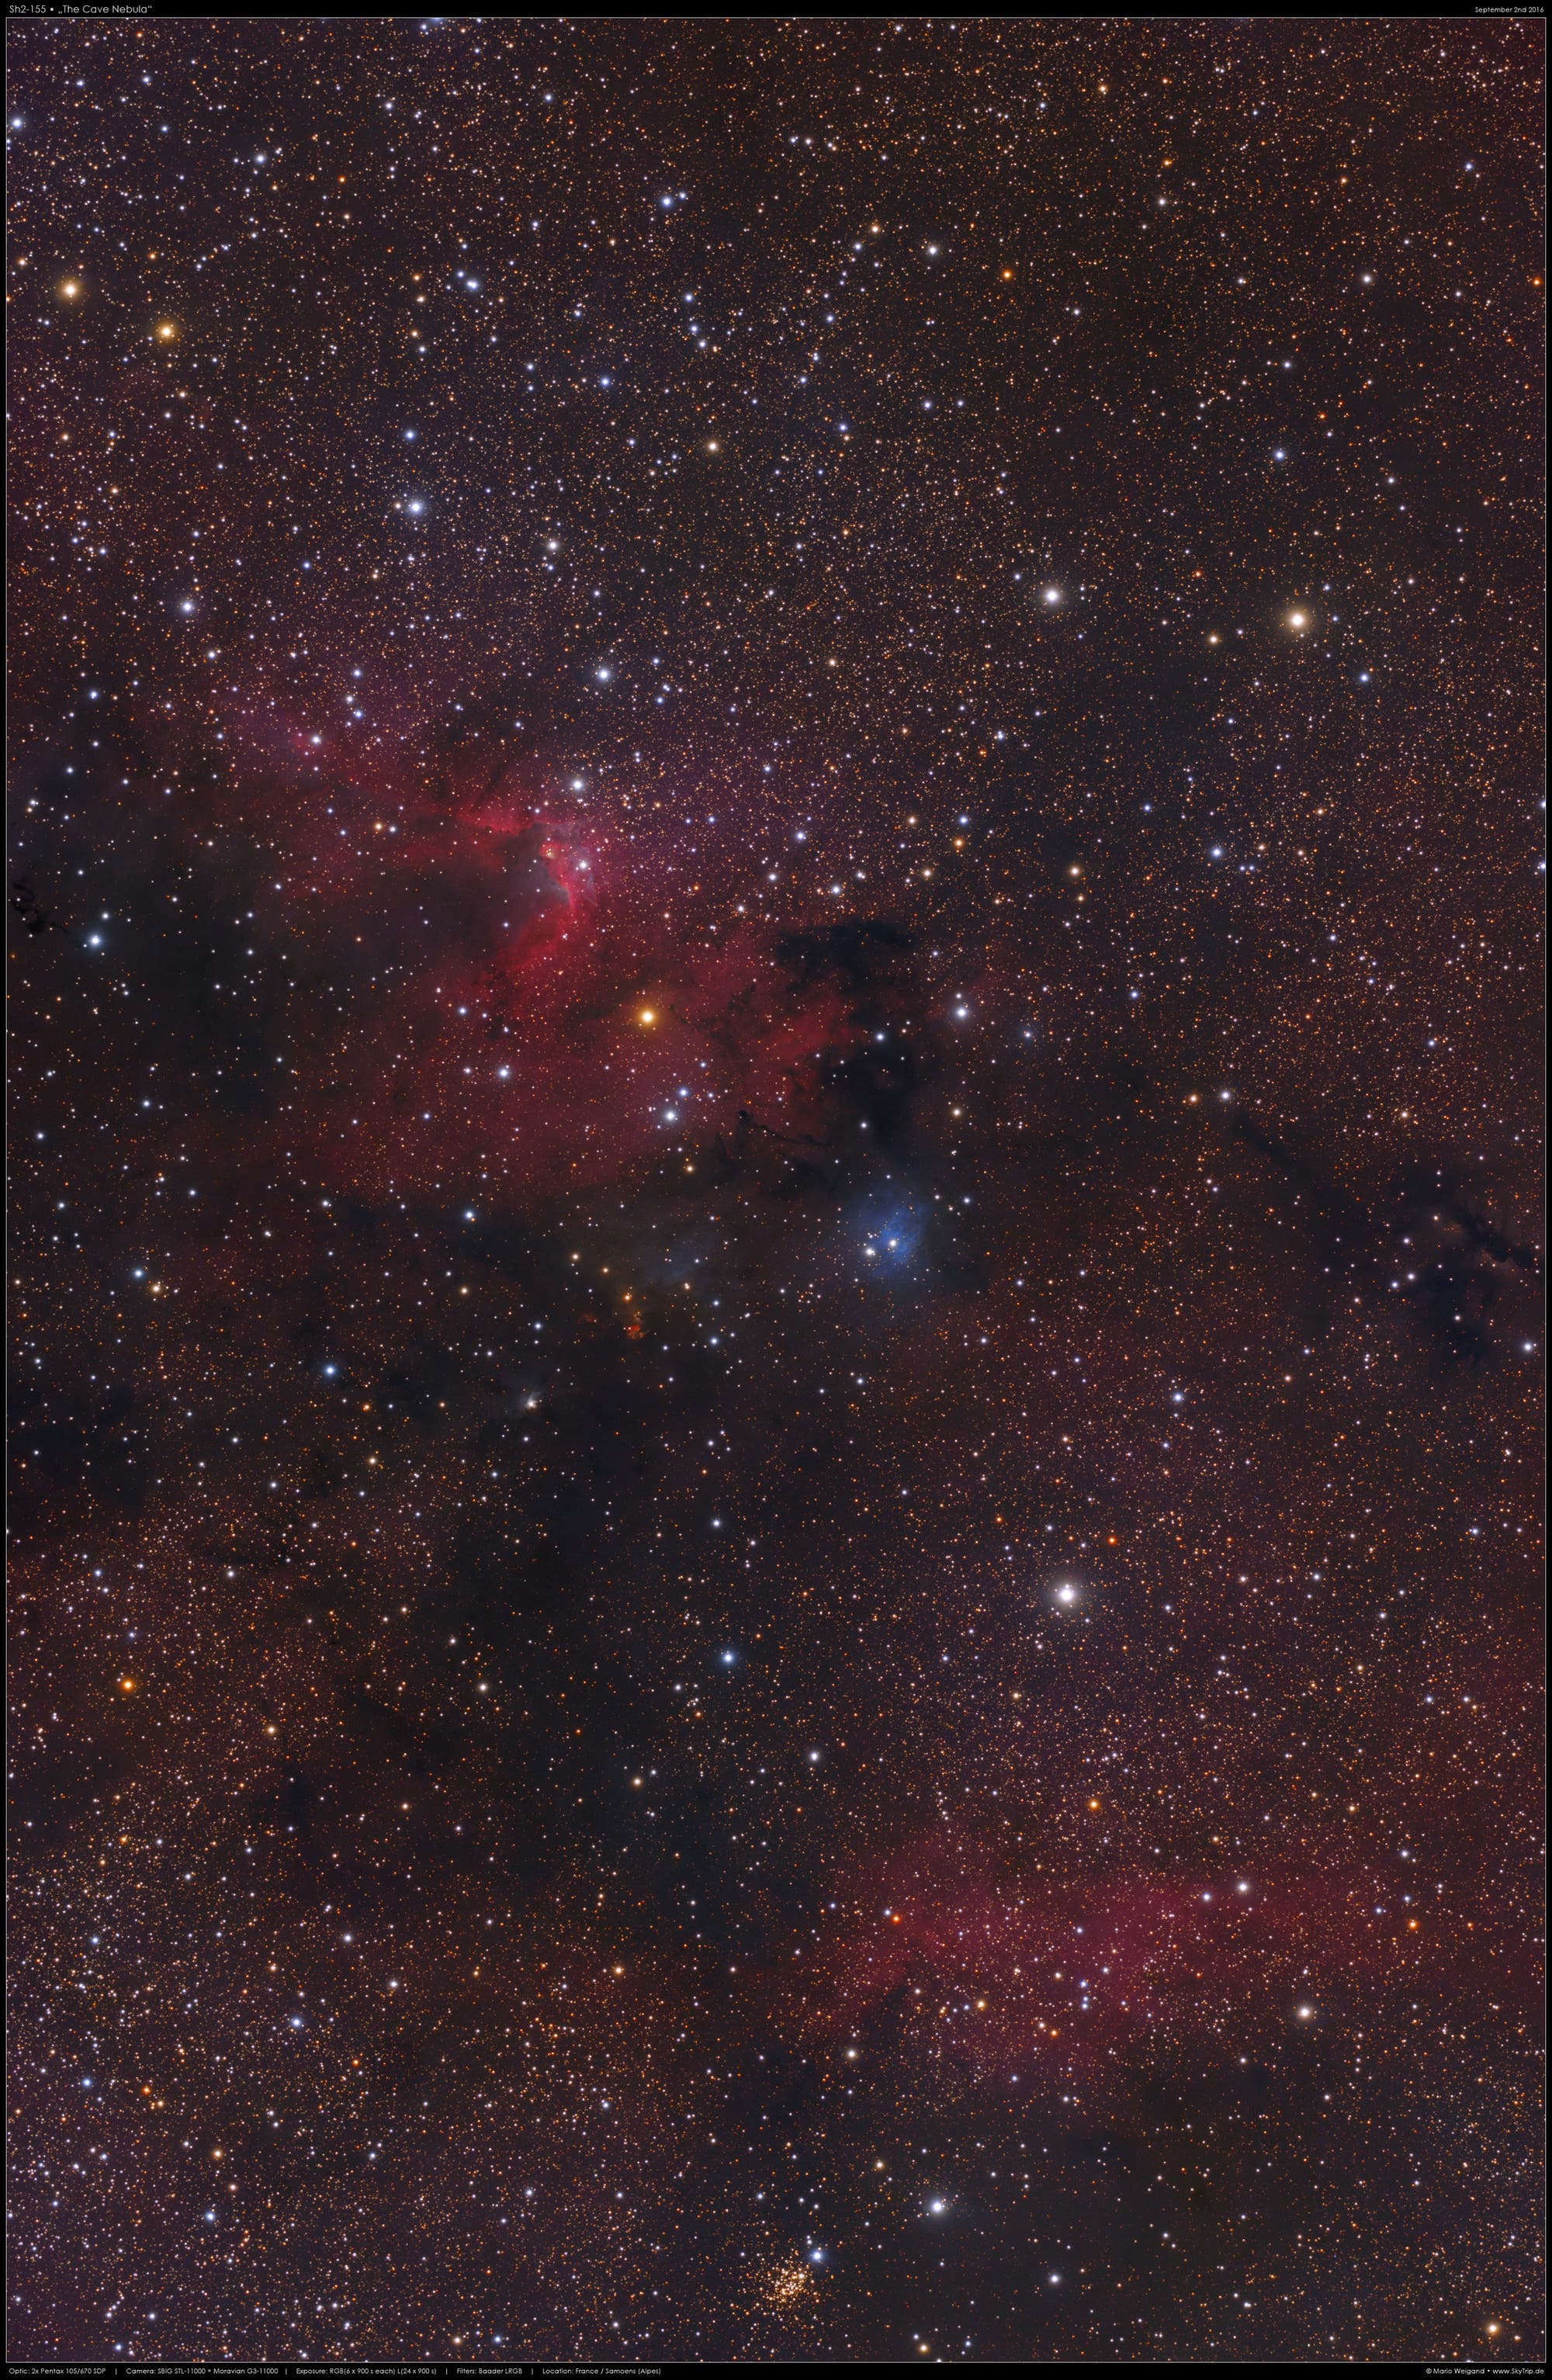 Sh2-155 "The Cave Nebula"